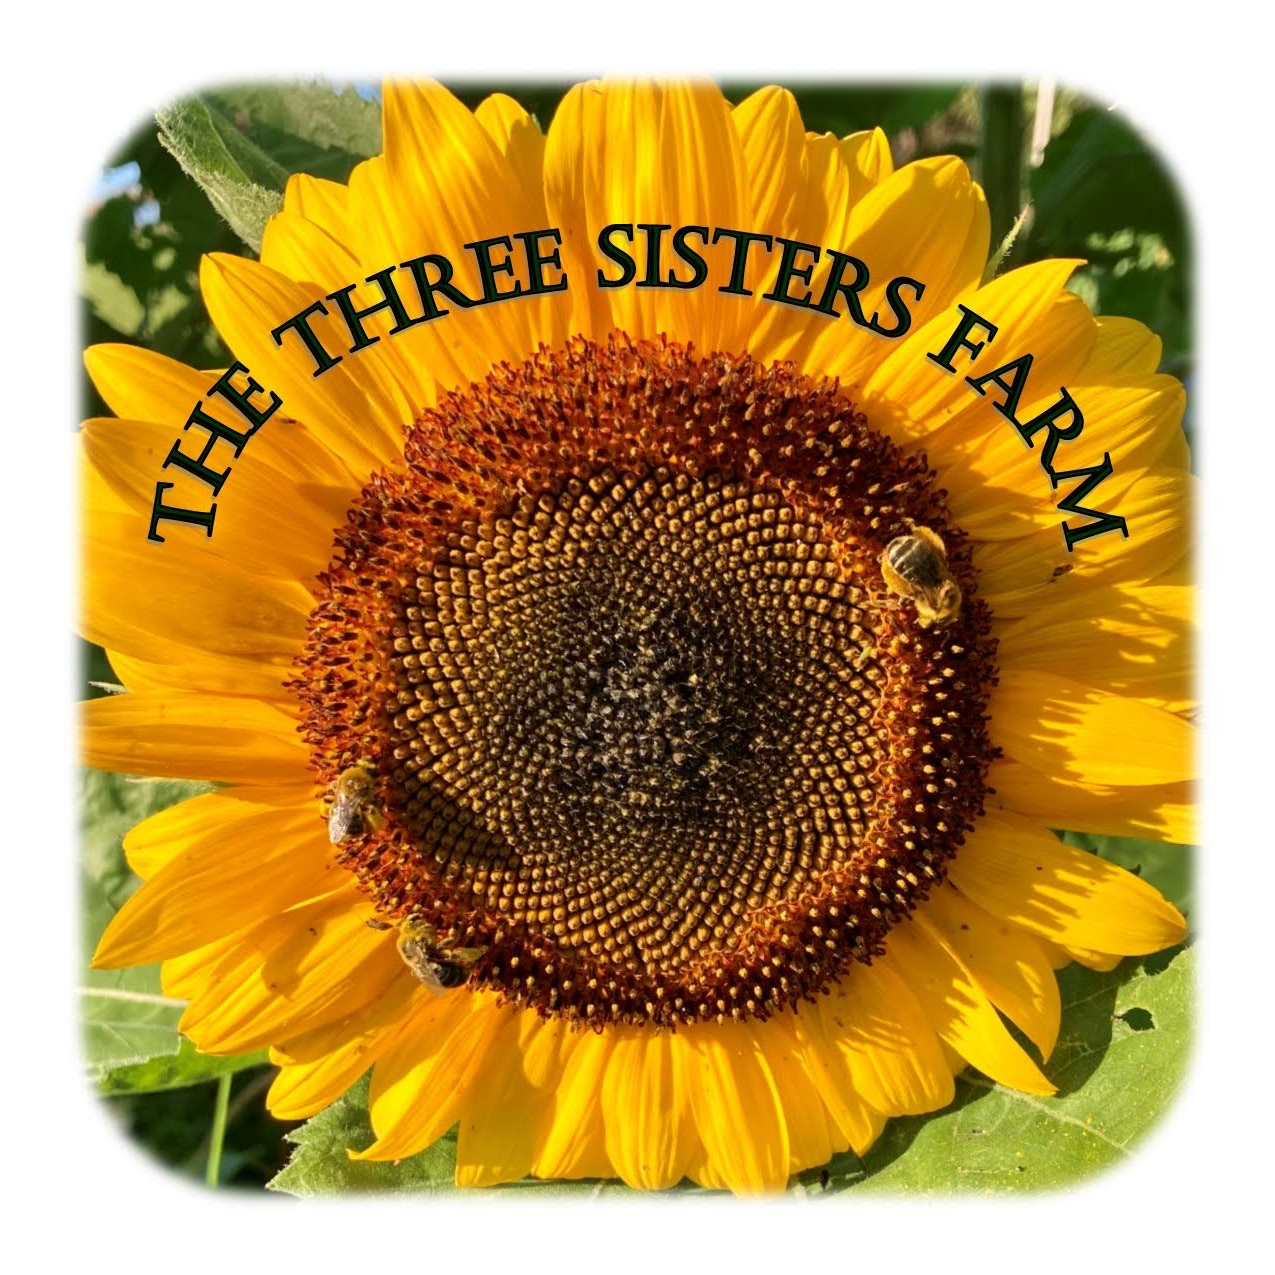 The Three Sisters Farm